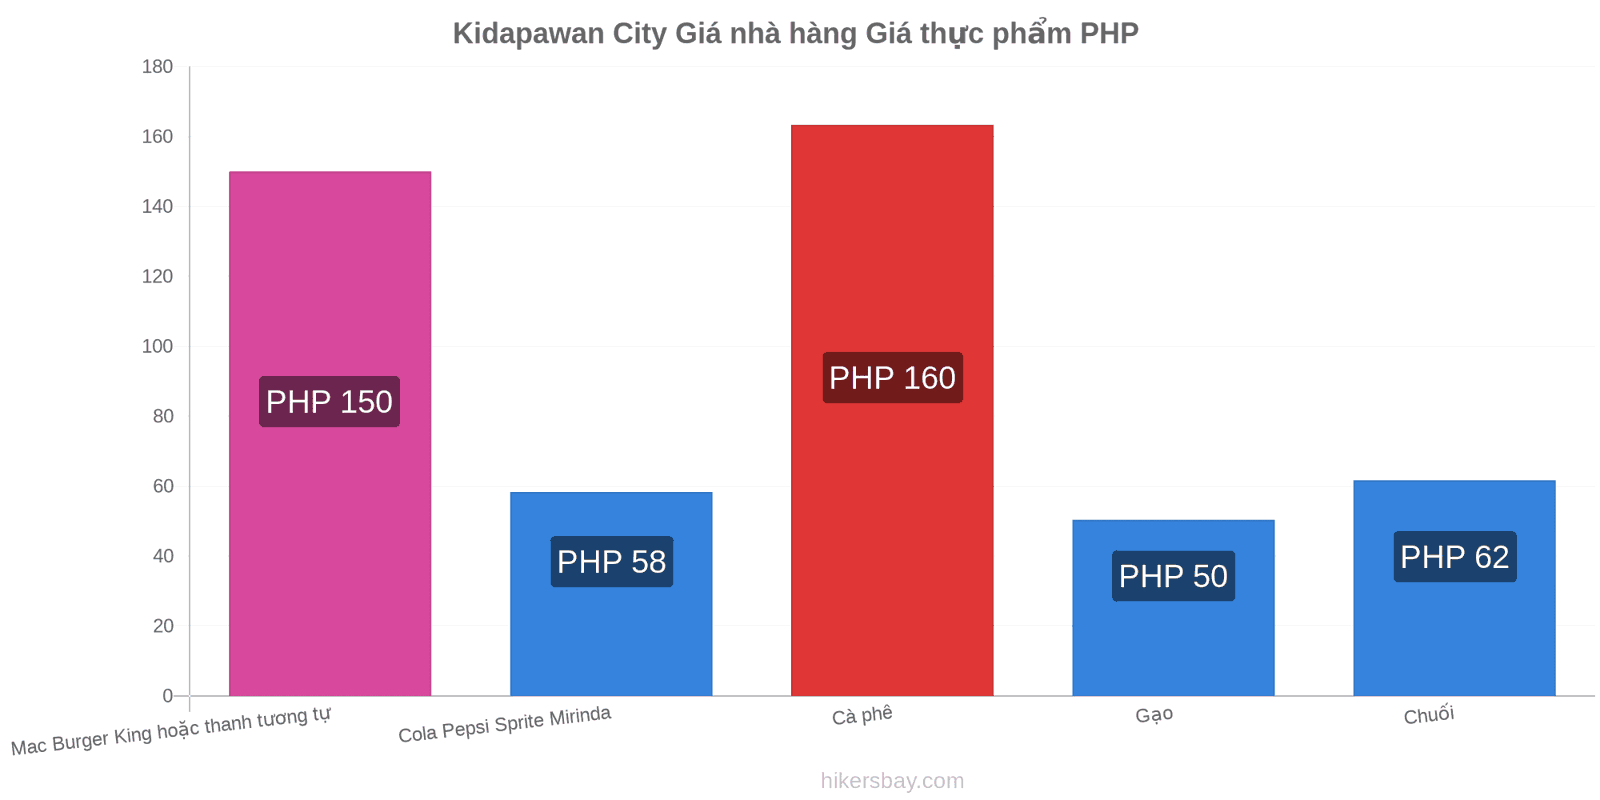 Kidapawan City thay đổi giá cả hikersbay.com